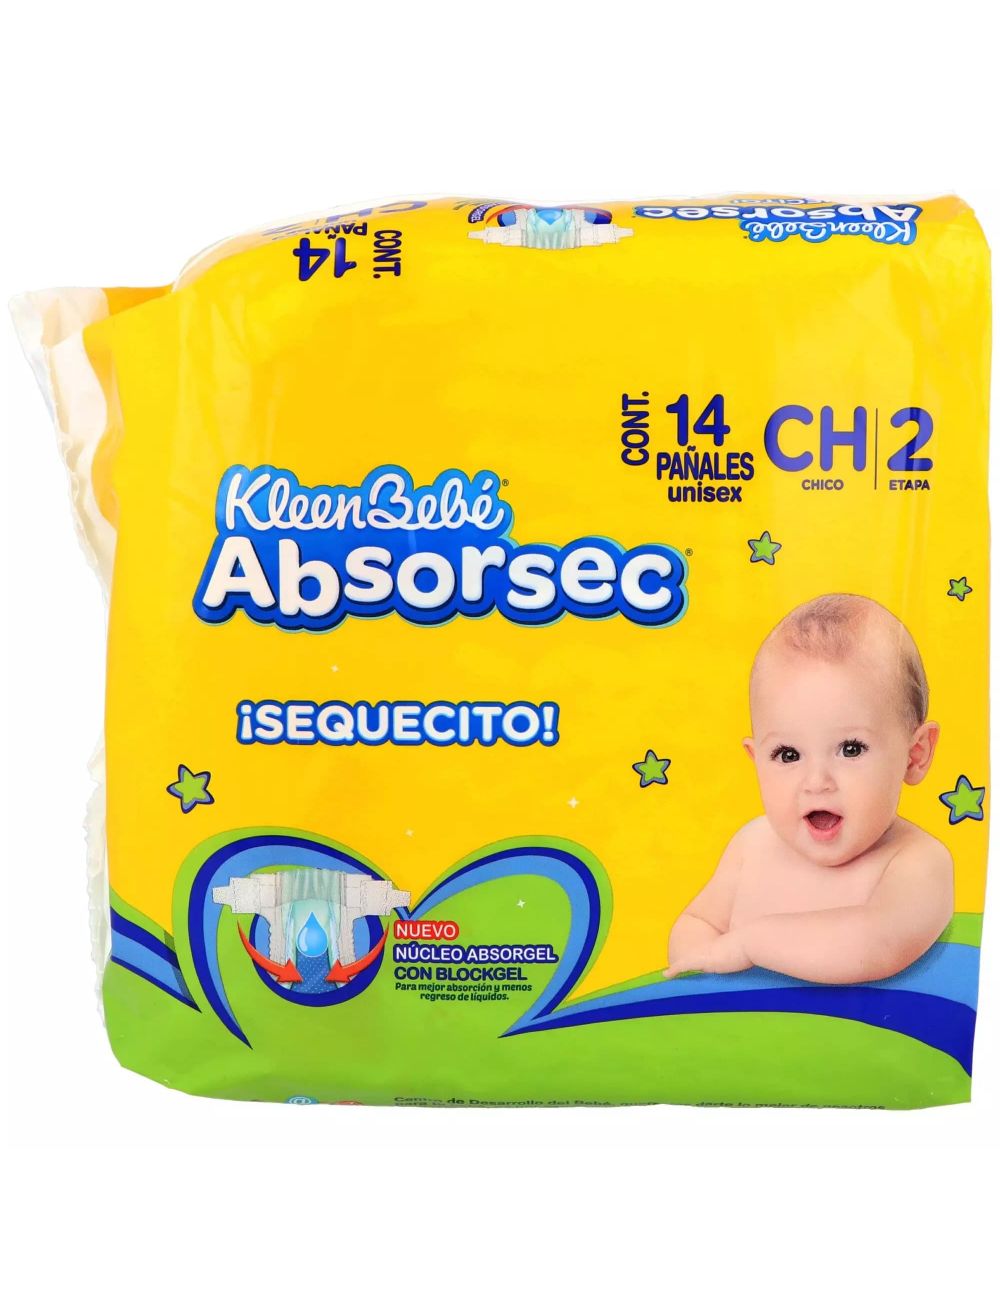 Panal Kbb Absorsec Ultra Ch C